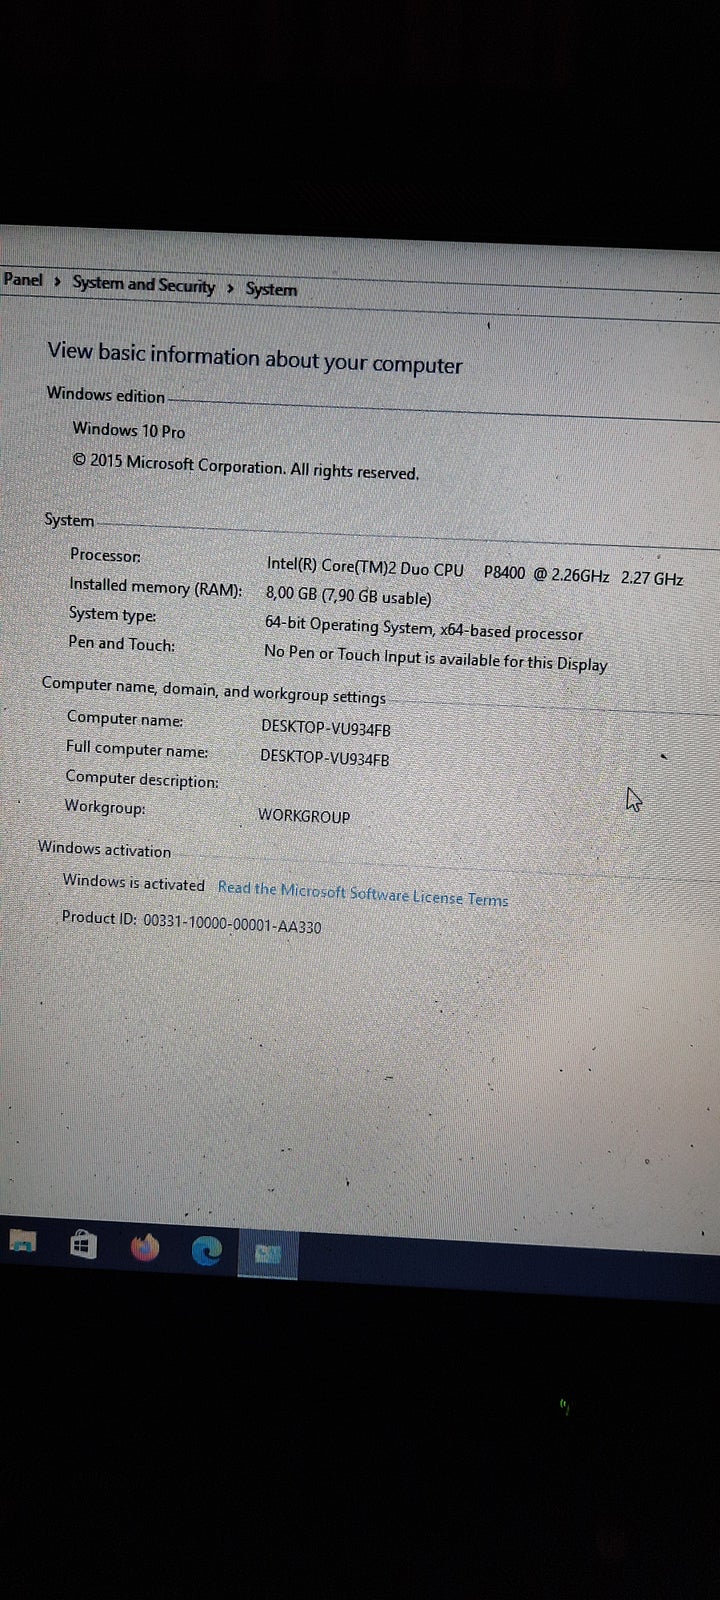 HP, 8GB GB ram, 700gb GB harddisk